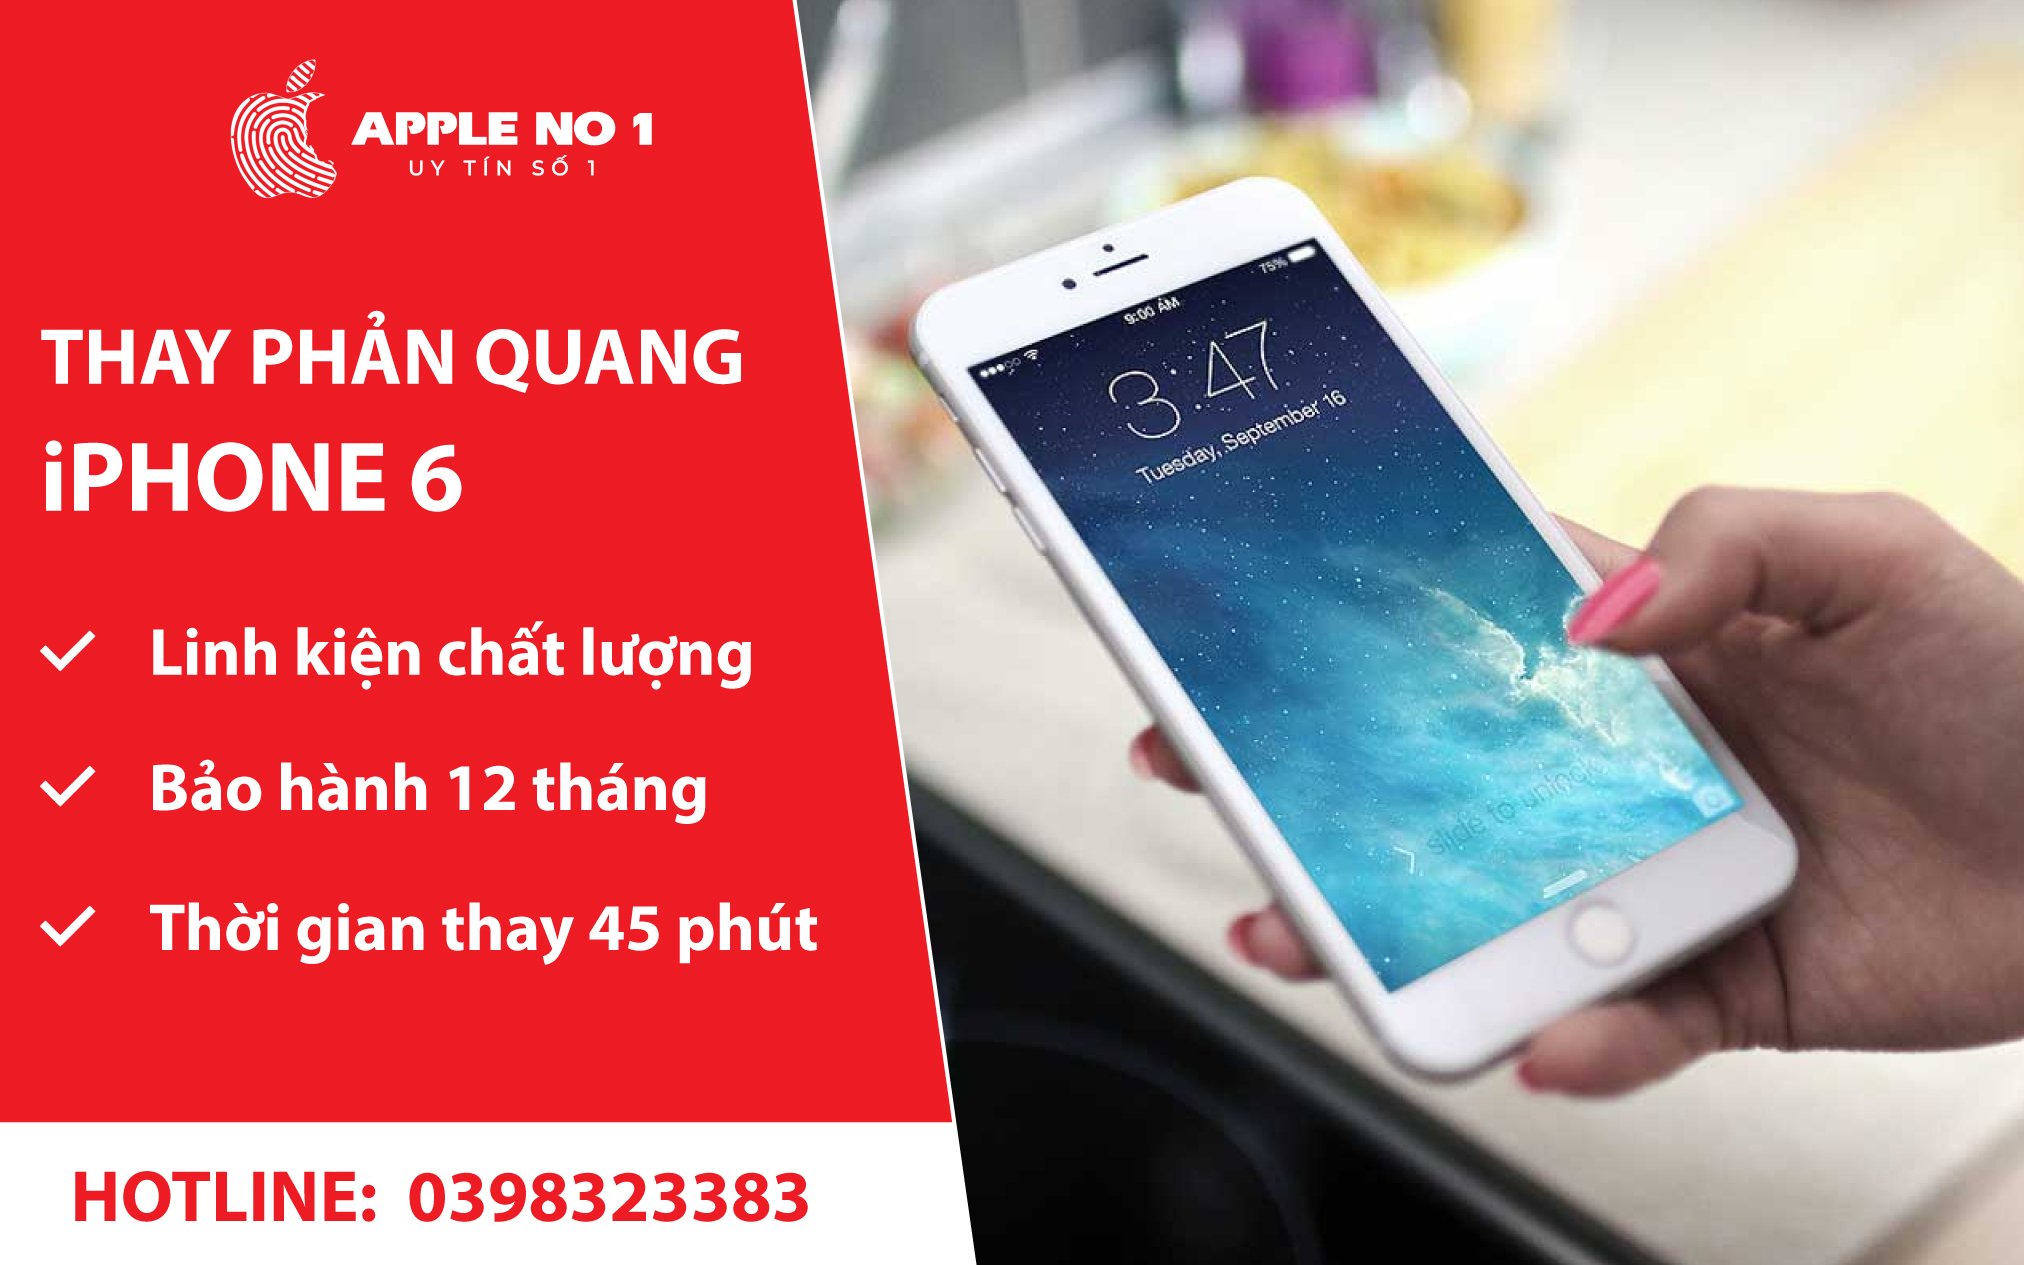 dich vu thay phan quang iphone 6 chat luong, chuyen nghiep tai Apple No.1